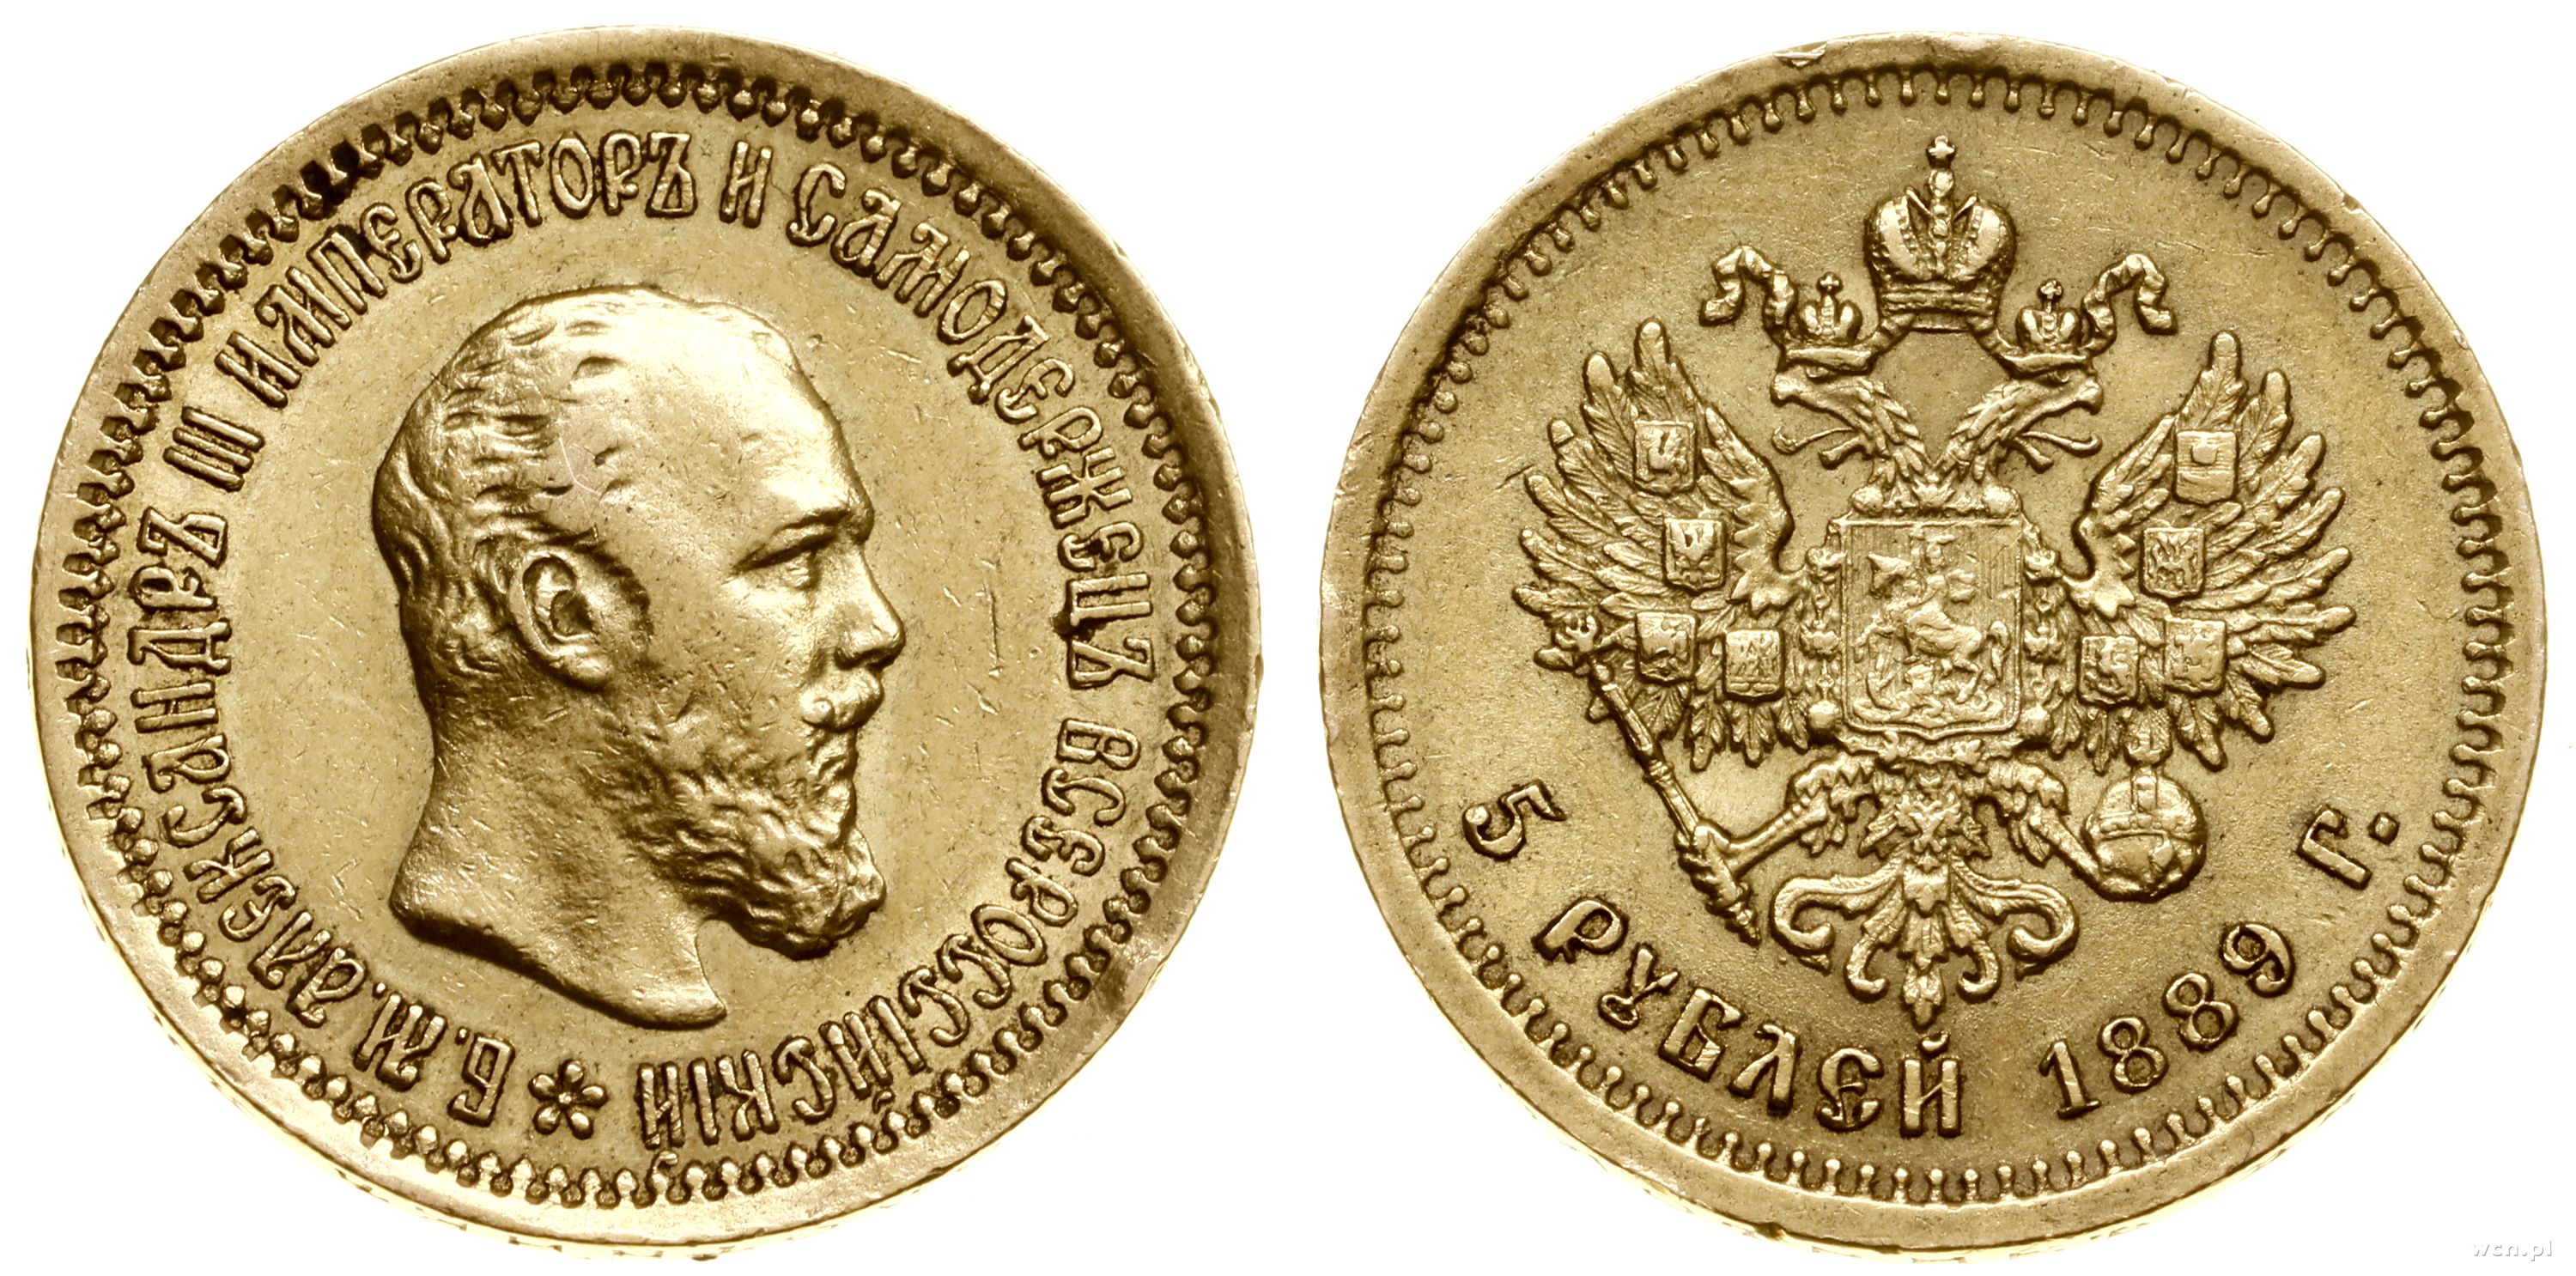 5 rubli 1889 (АГ), Petersburg, złoto, 6.42 g, Fr